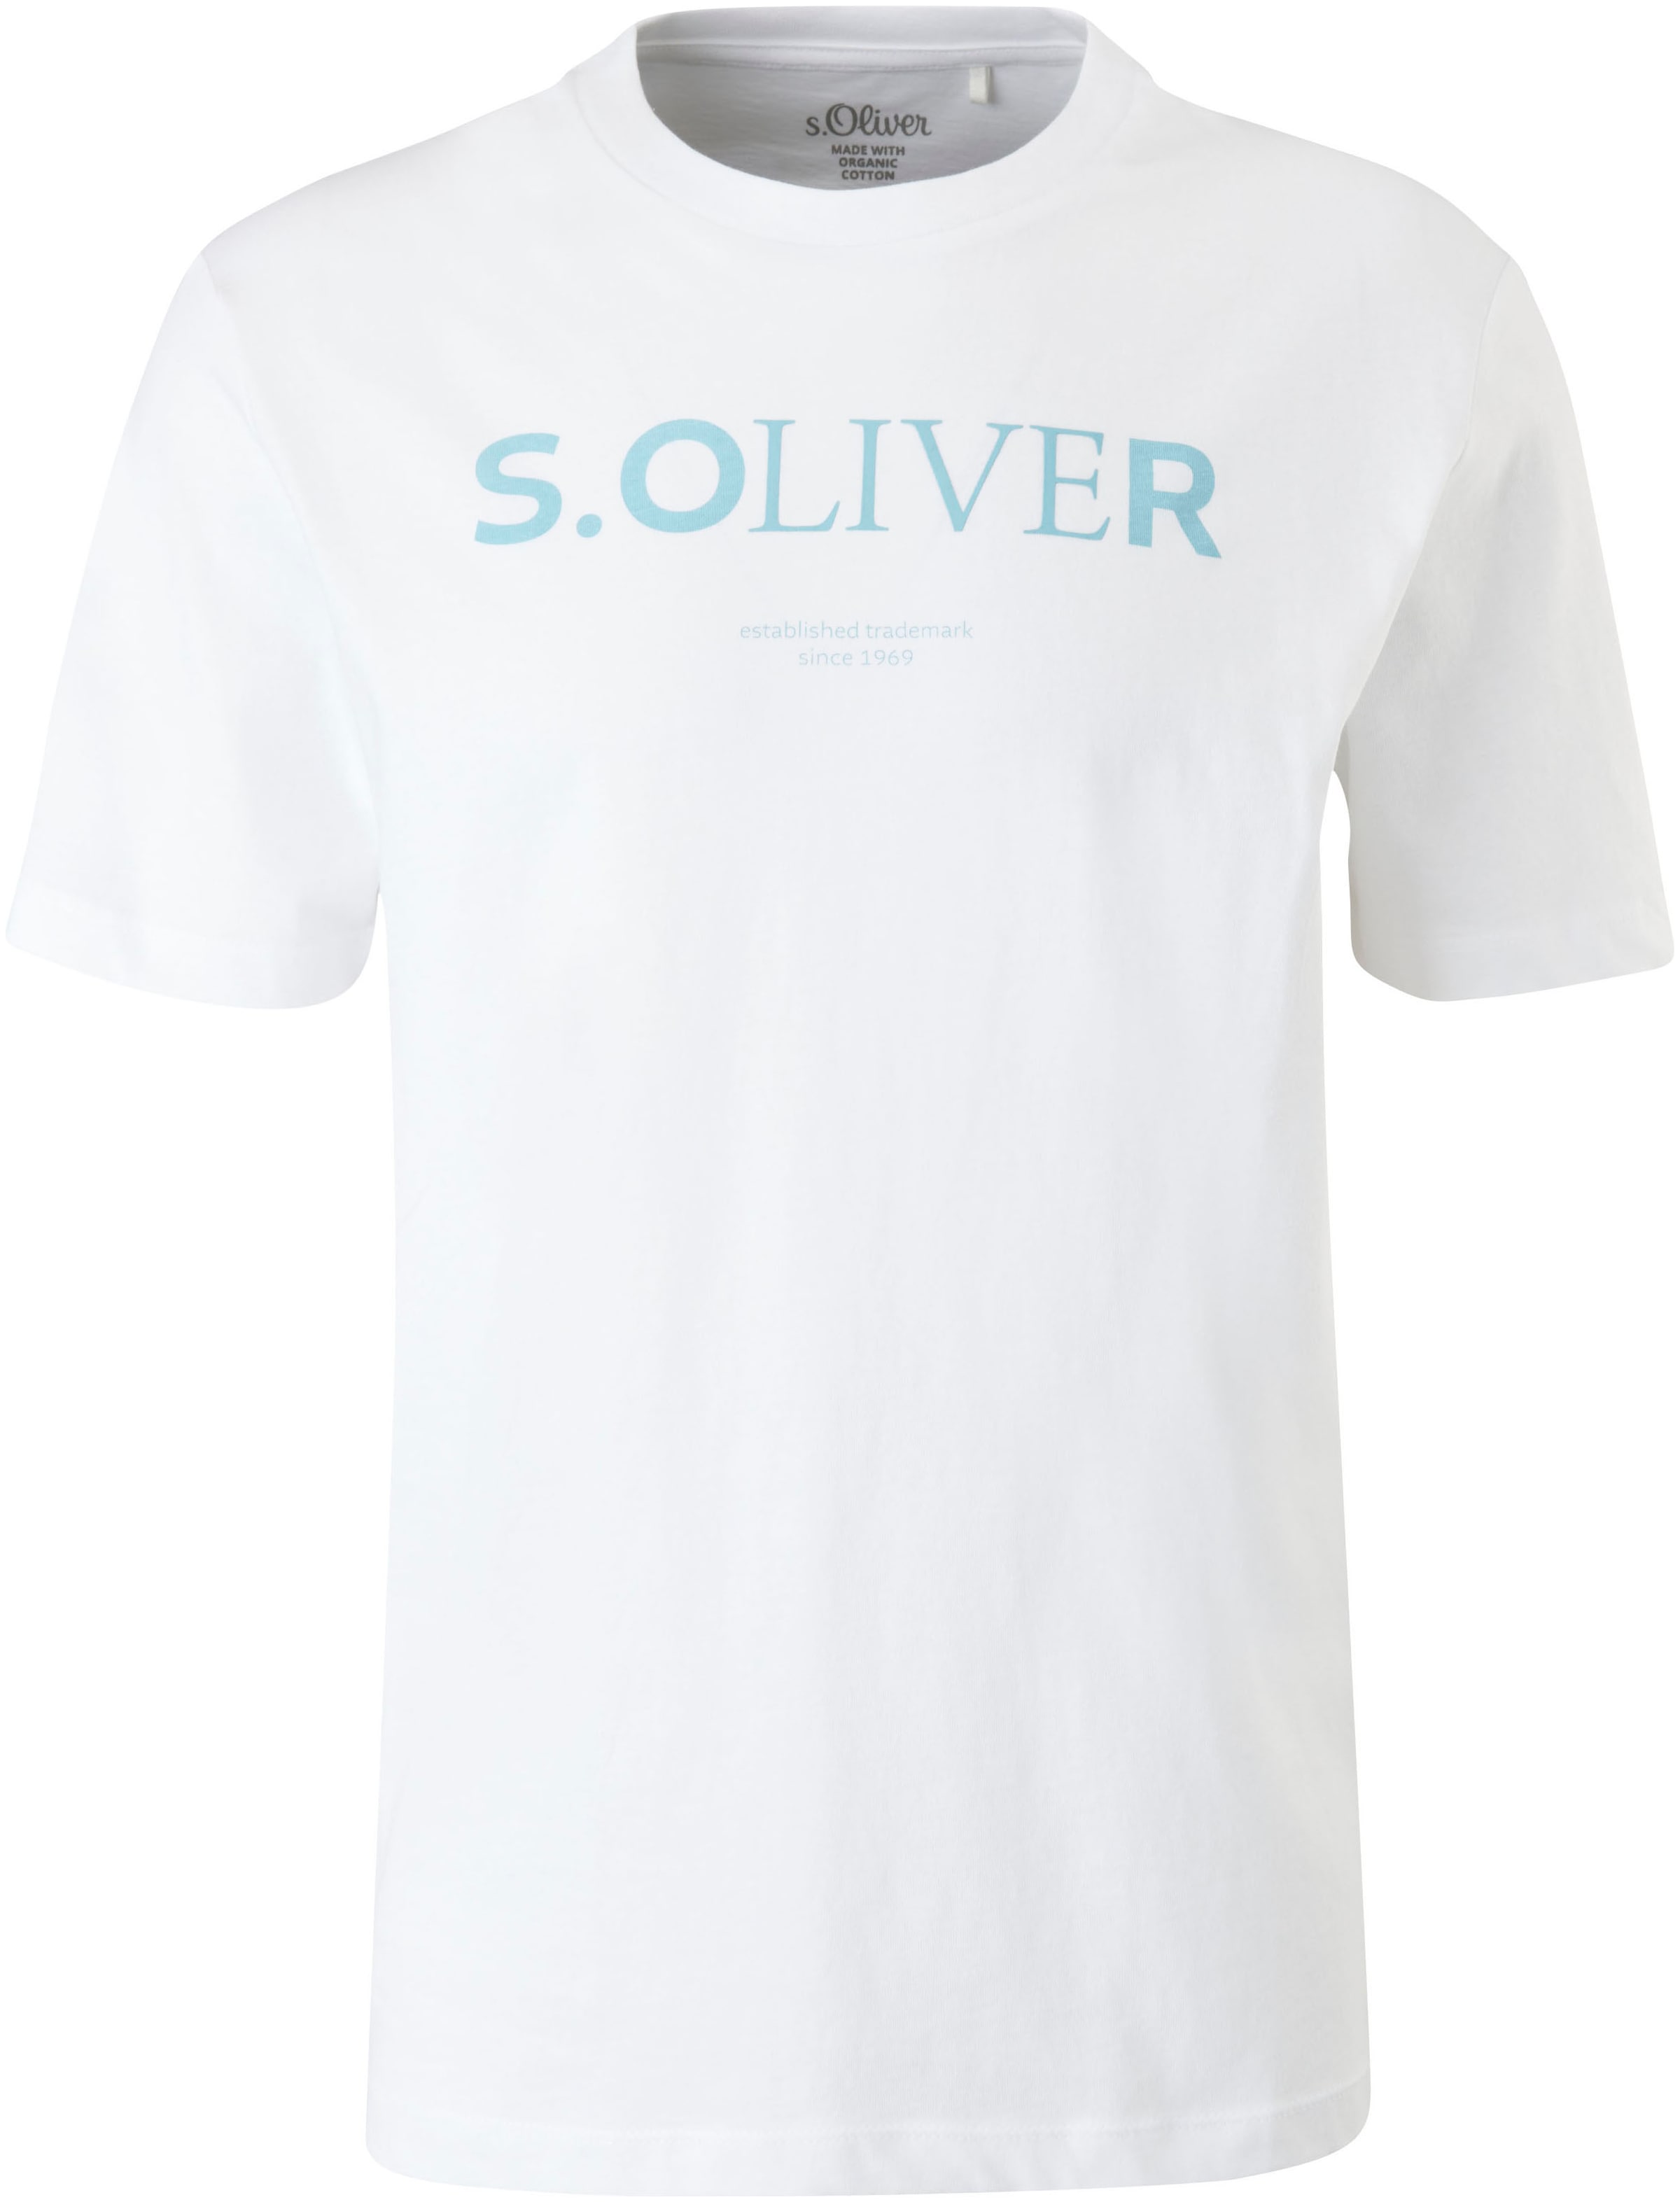 s.Oliver T-Shirt, mit Frontlogoprint